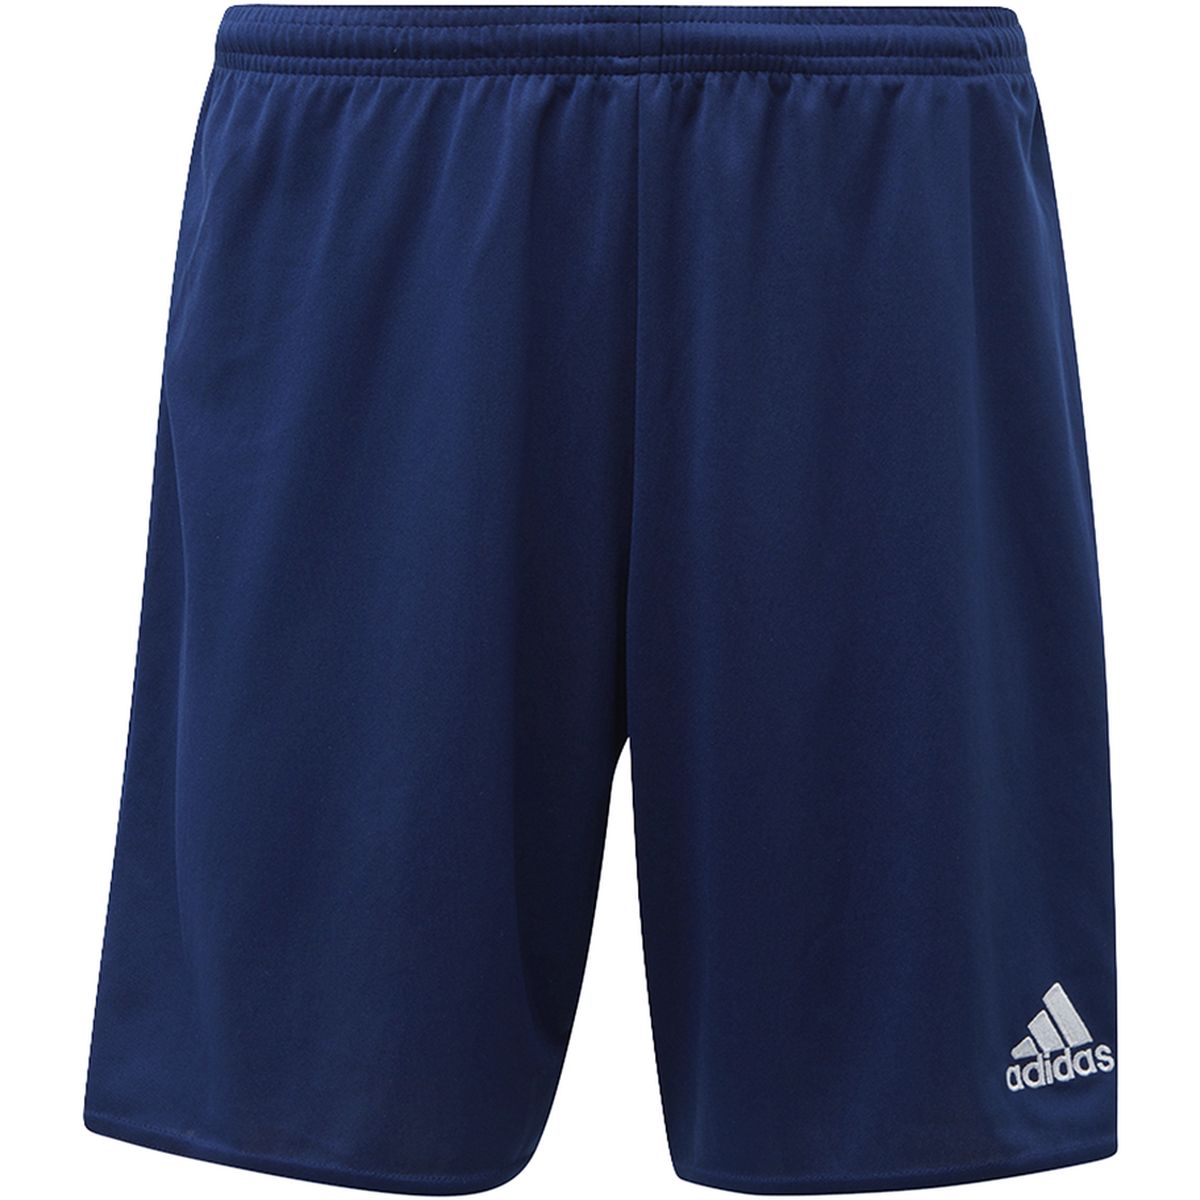 Adidas Parma 16 Shorts Herren_1